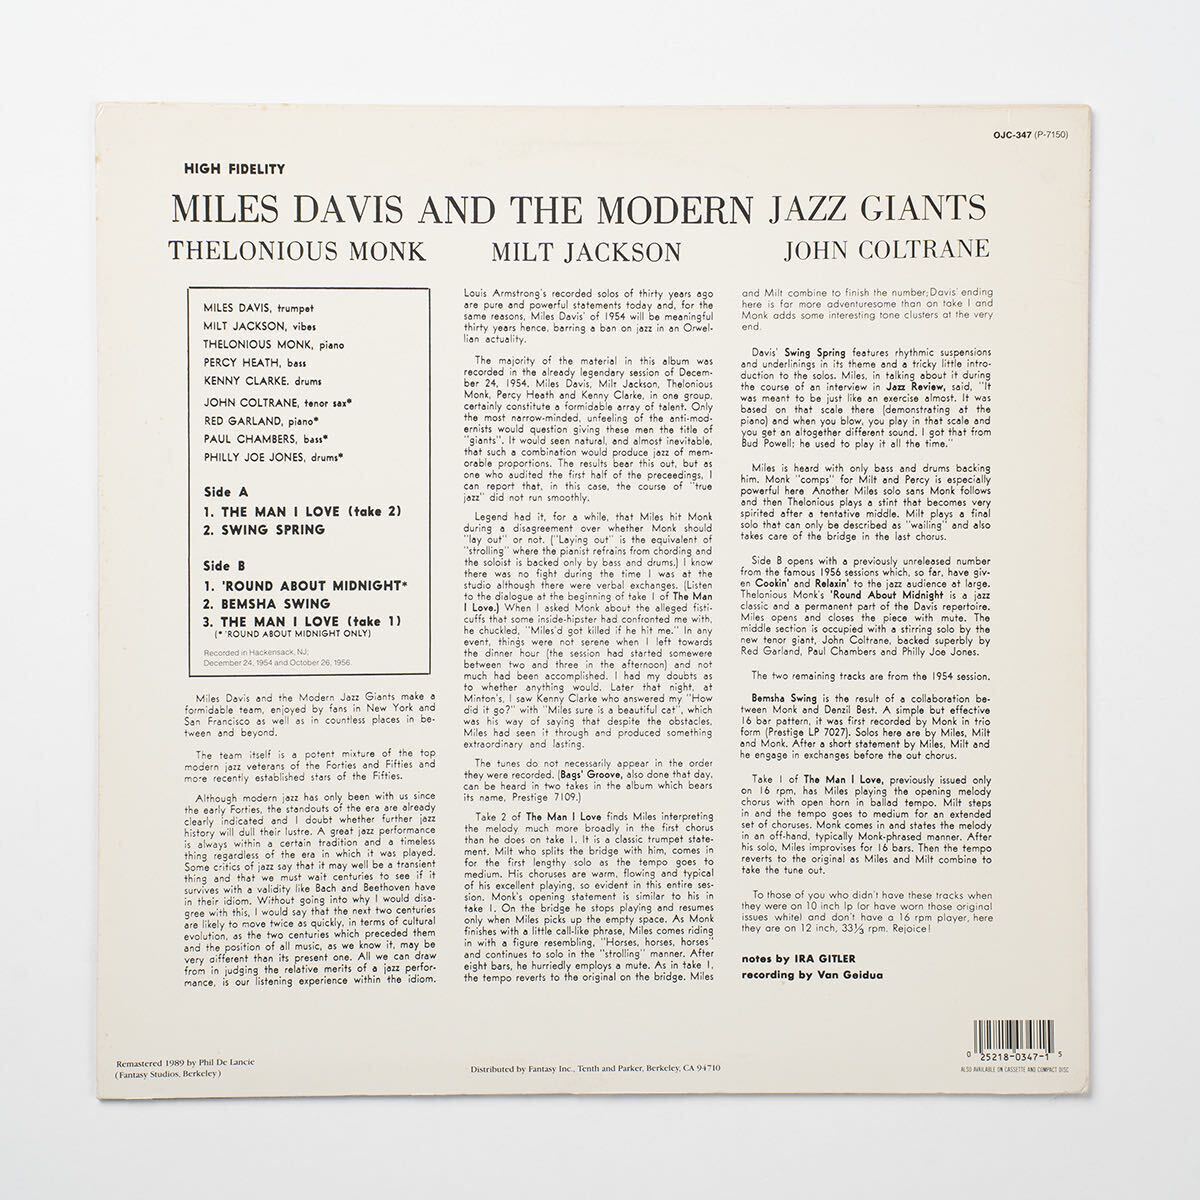 US盤 Miles Davis And The Modern Jazz Giants OJC-347 P-7150 LP レコード_画像3